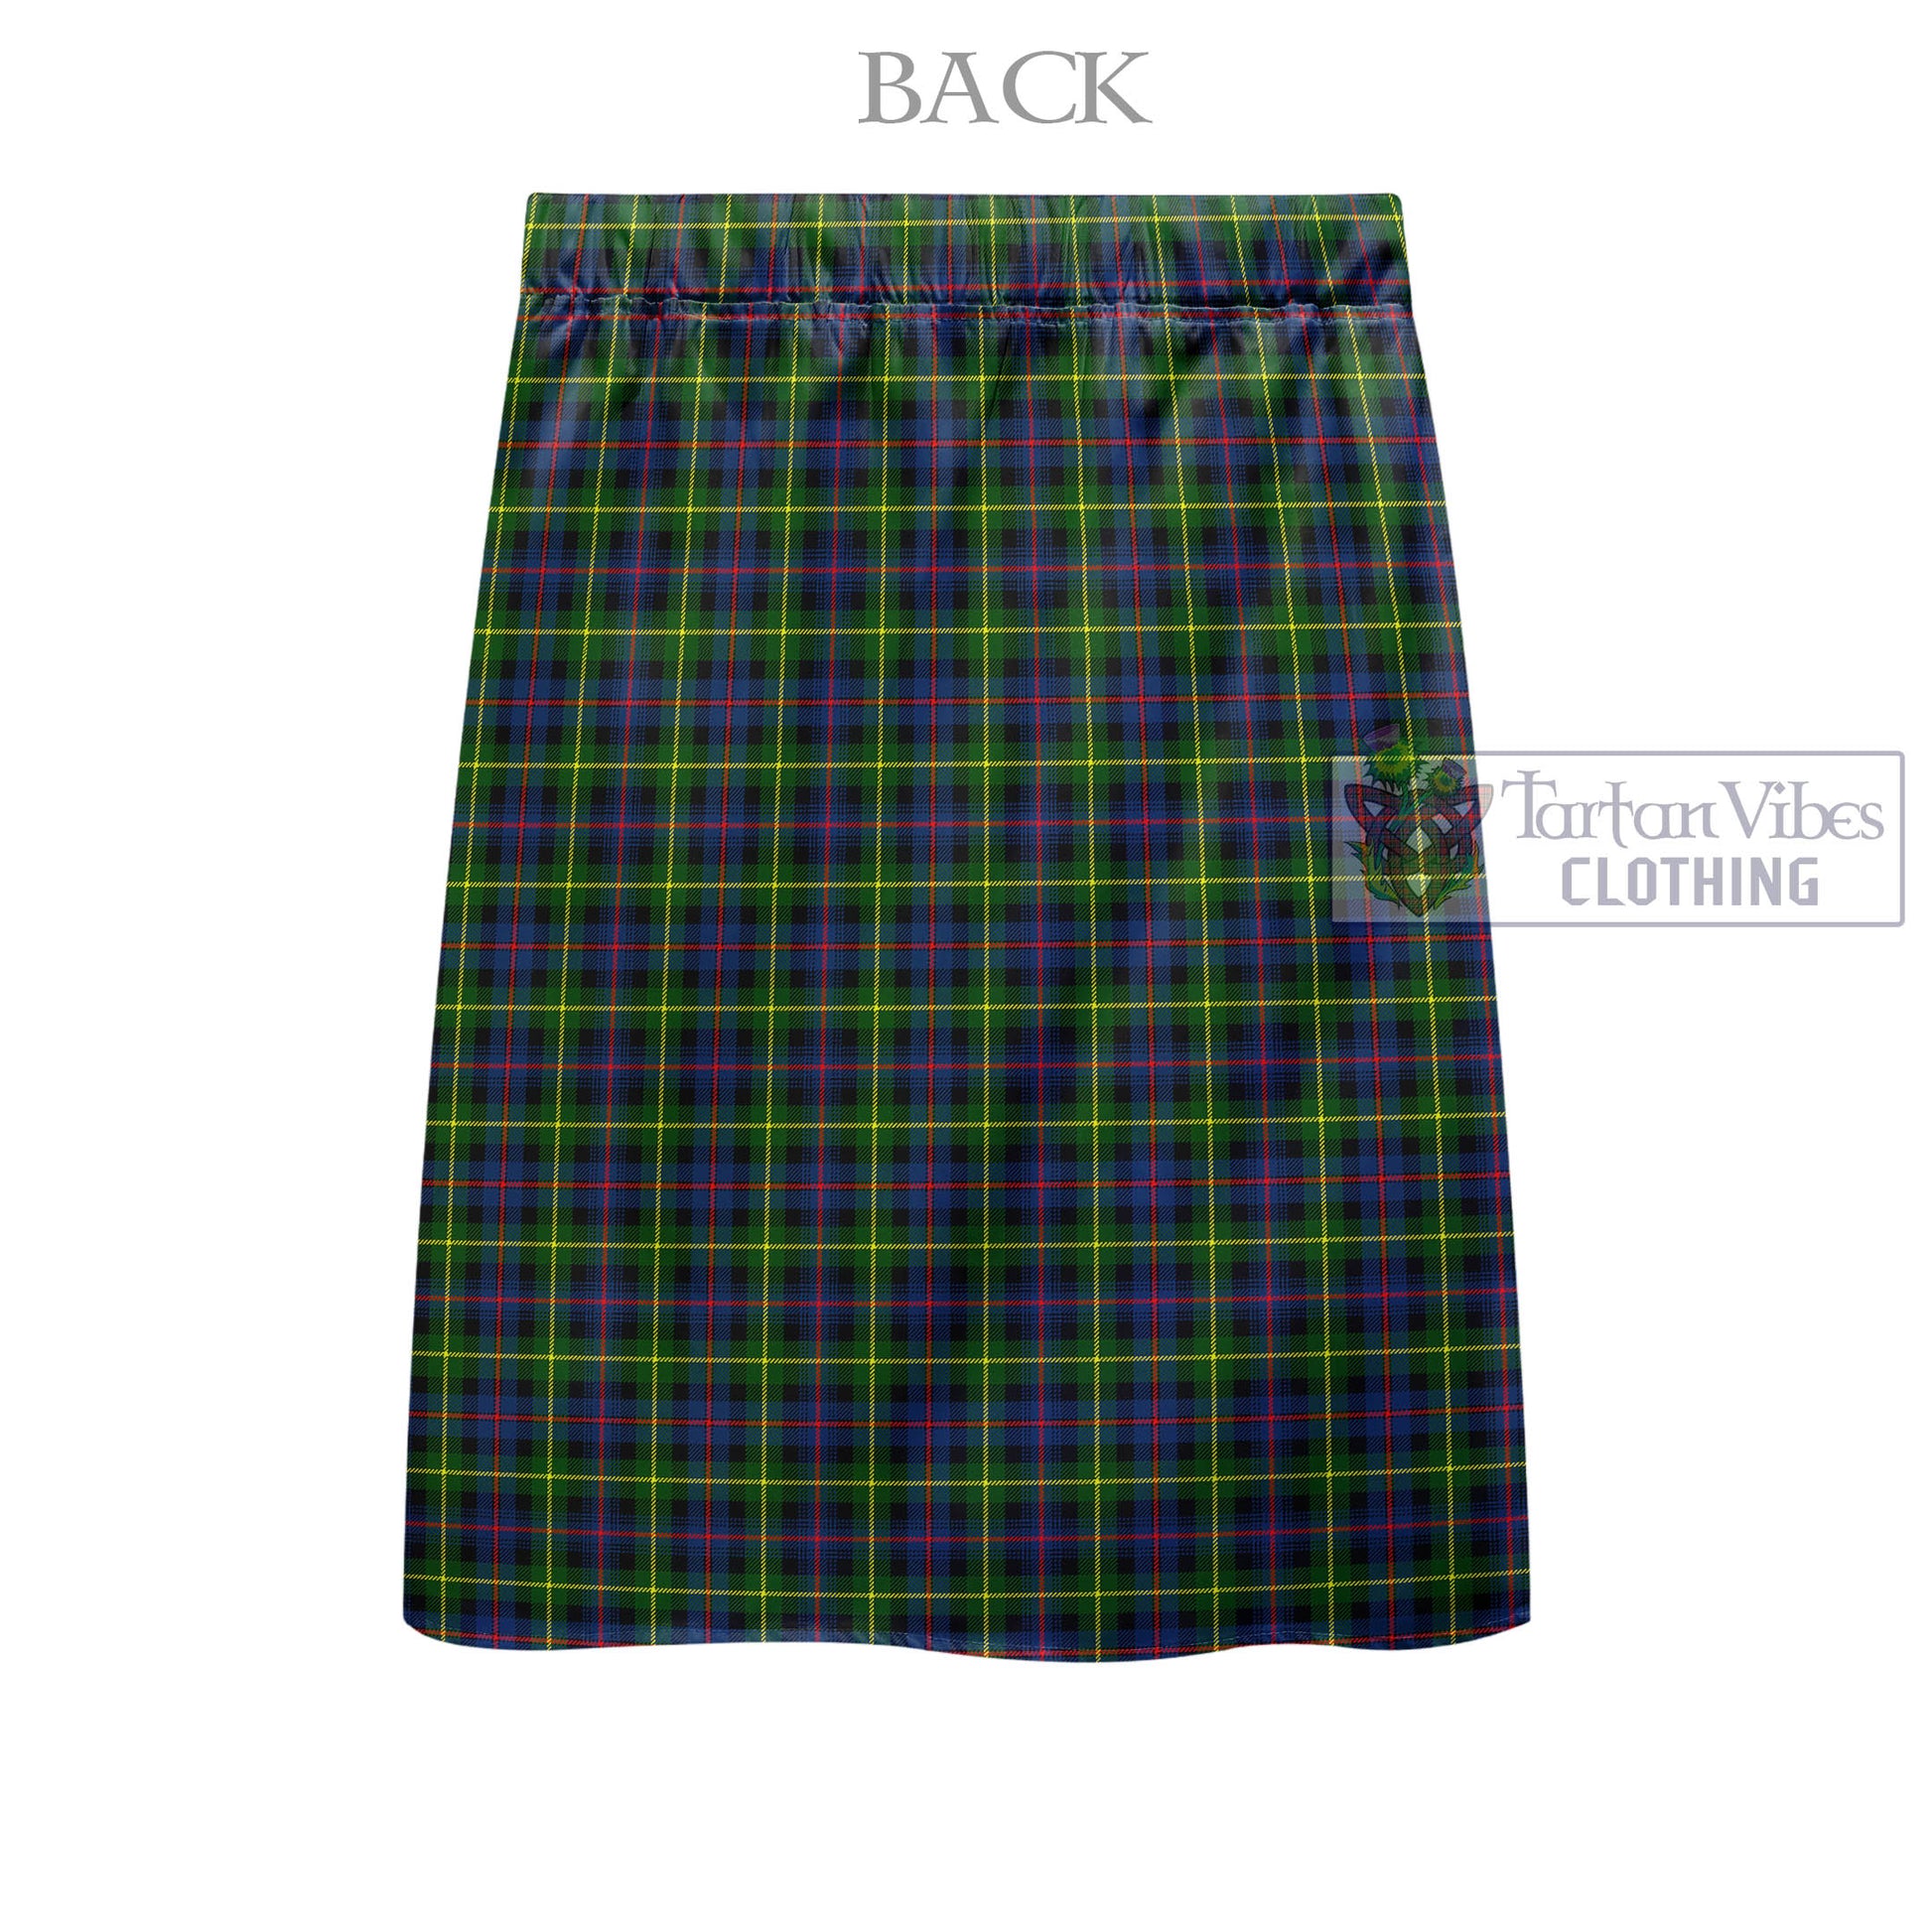 Tartan Vibes Clothing Farquharson Modern Tartan Men's Pleated Skirt - Fashion Casual Retro Scottish Style